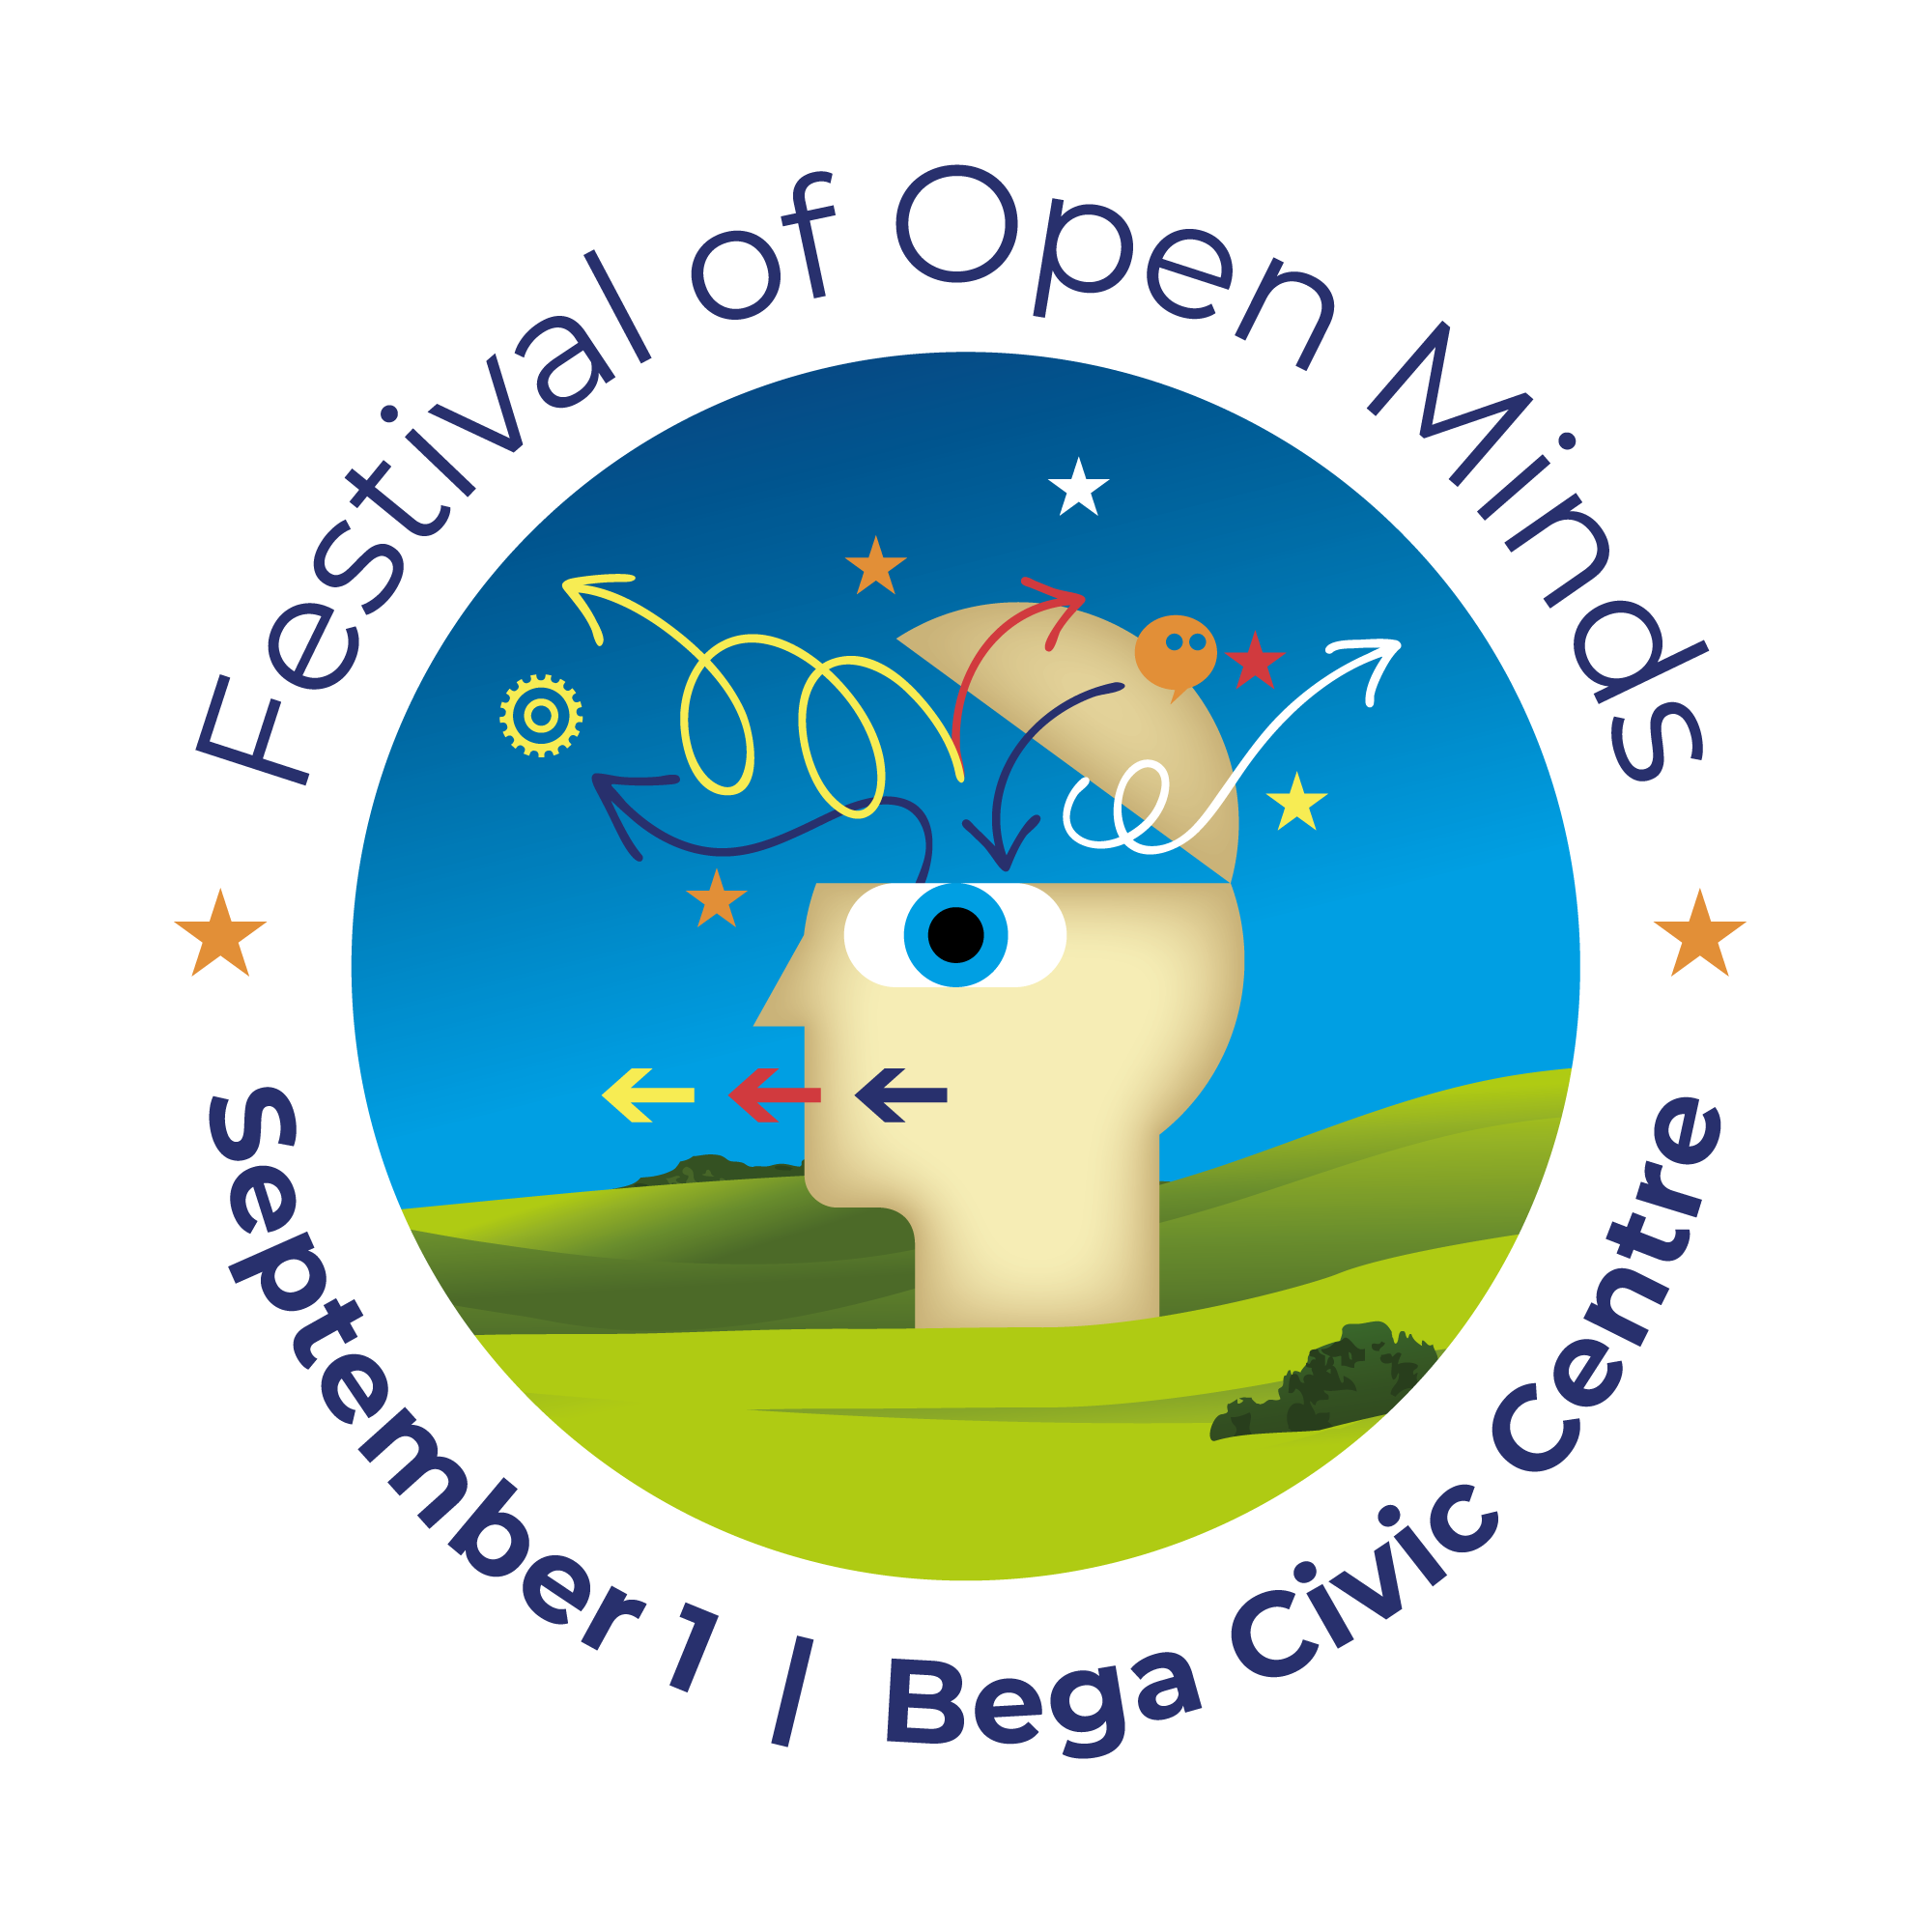 The Festival of Open Minds - challenging bias, fostering conversation, building understanding